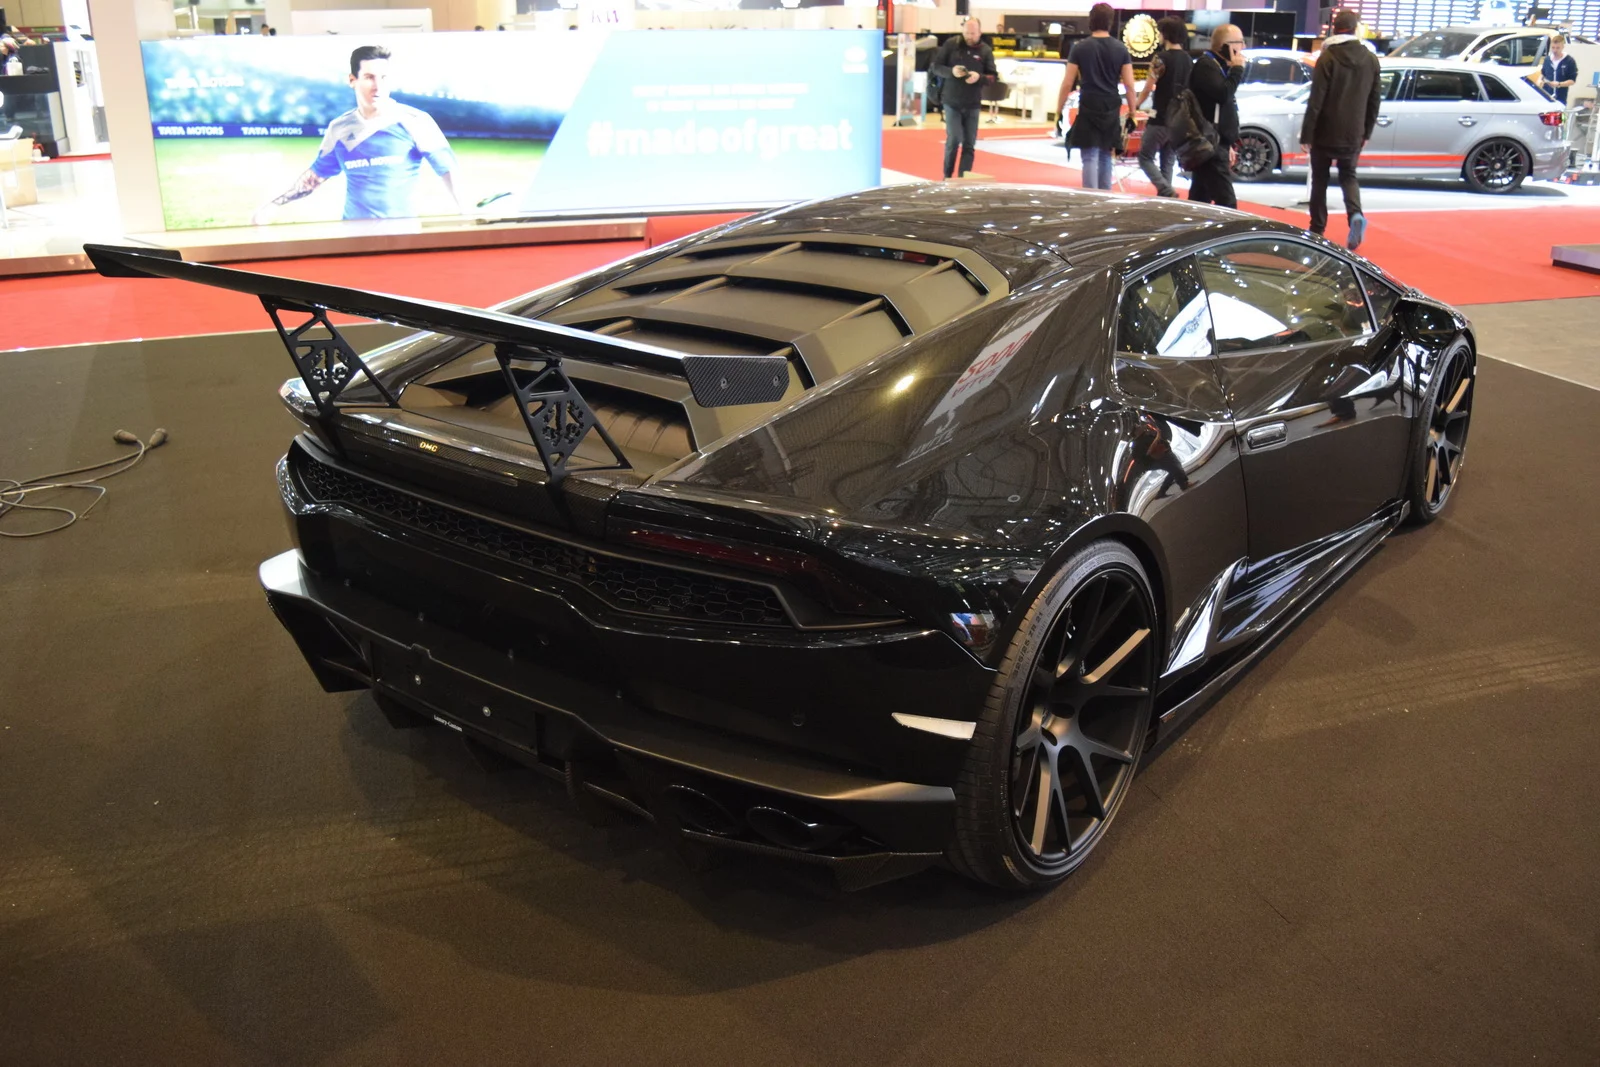 DMC độ lại Lamborghini Huracan tại Geneva Motor Show 2016